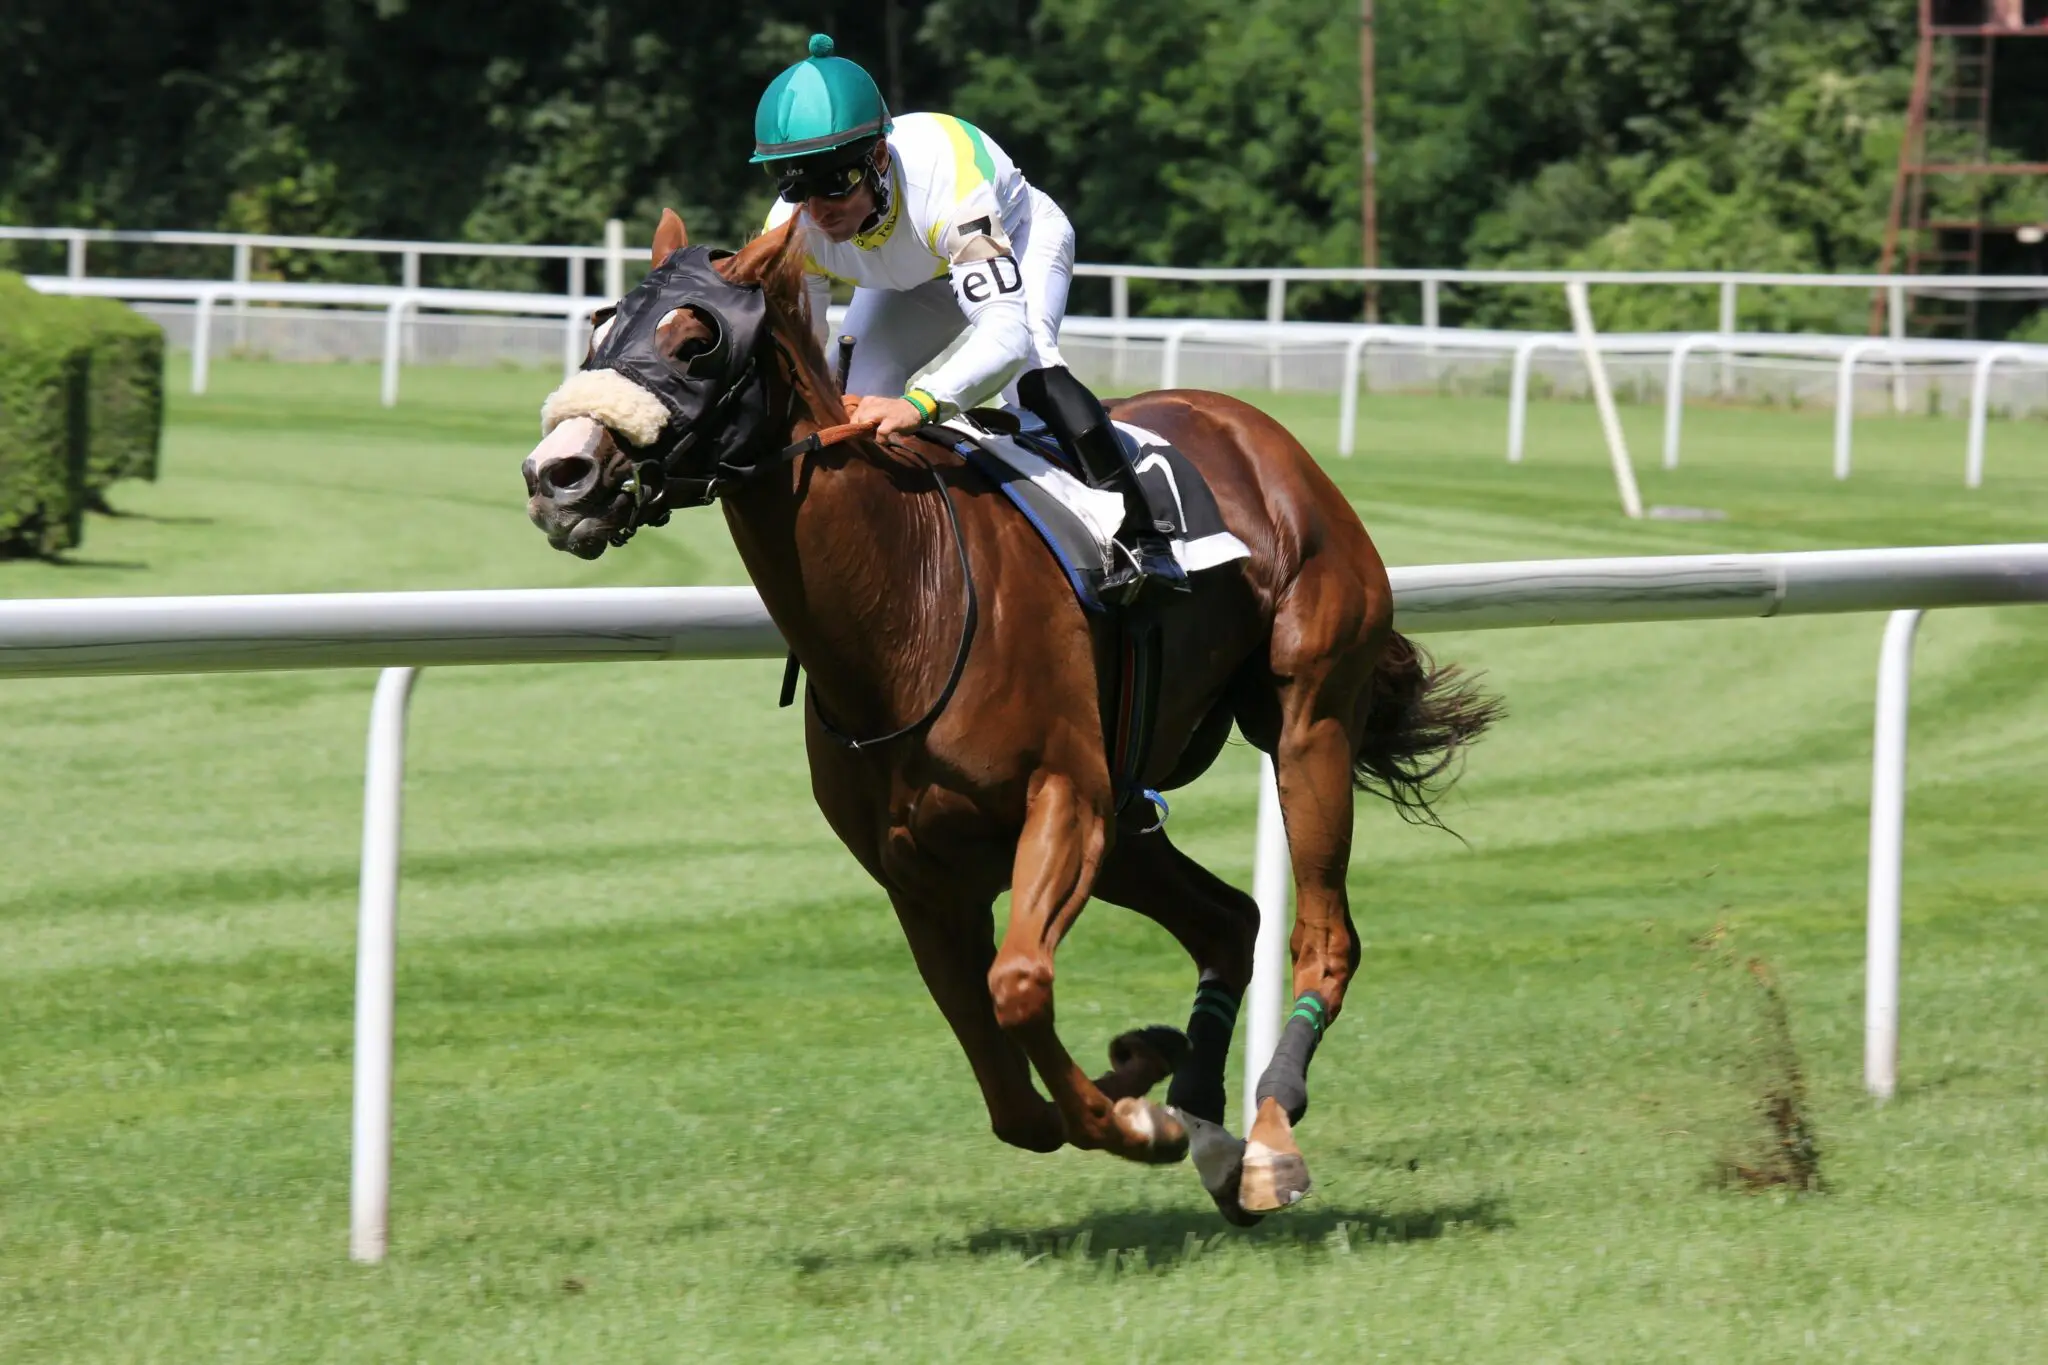 Jockey racing on a horse